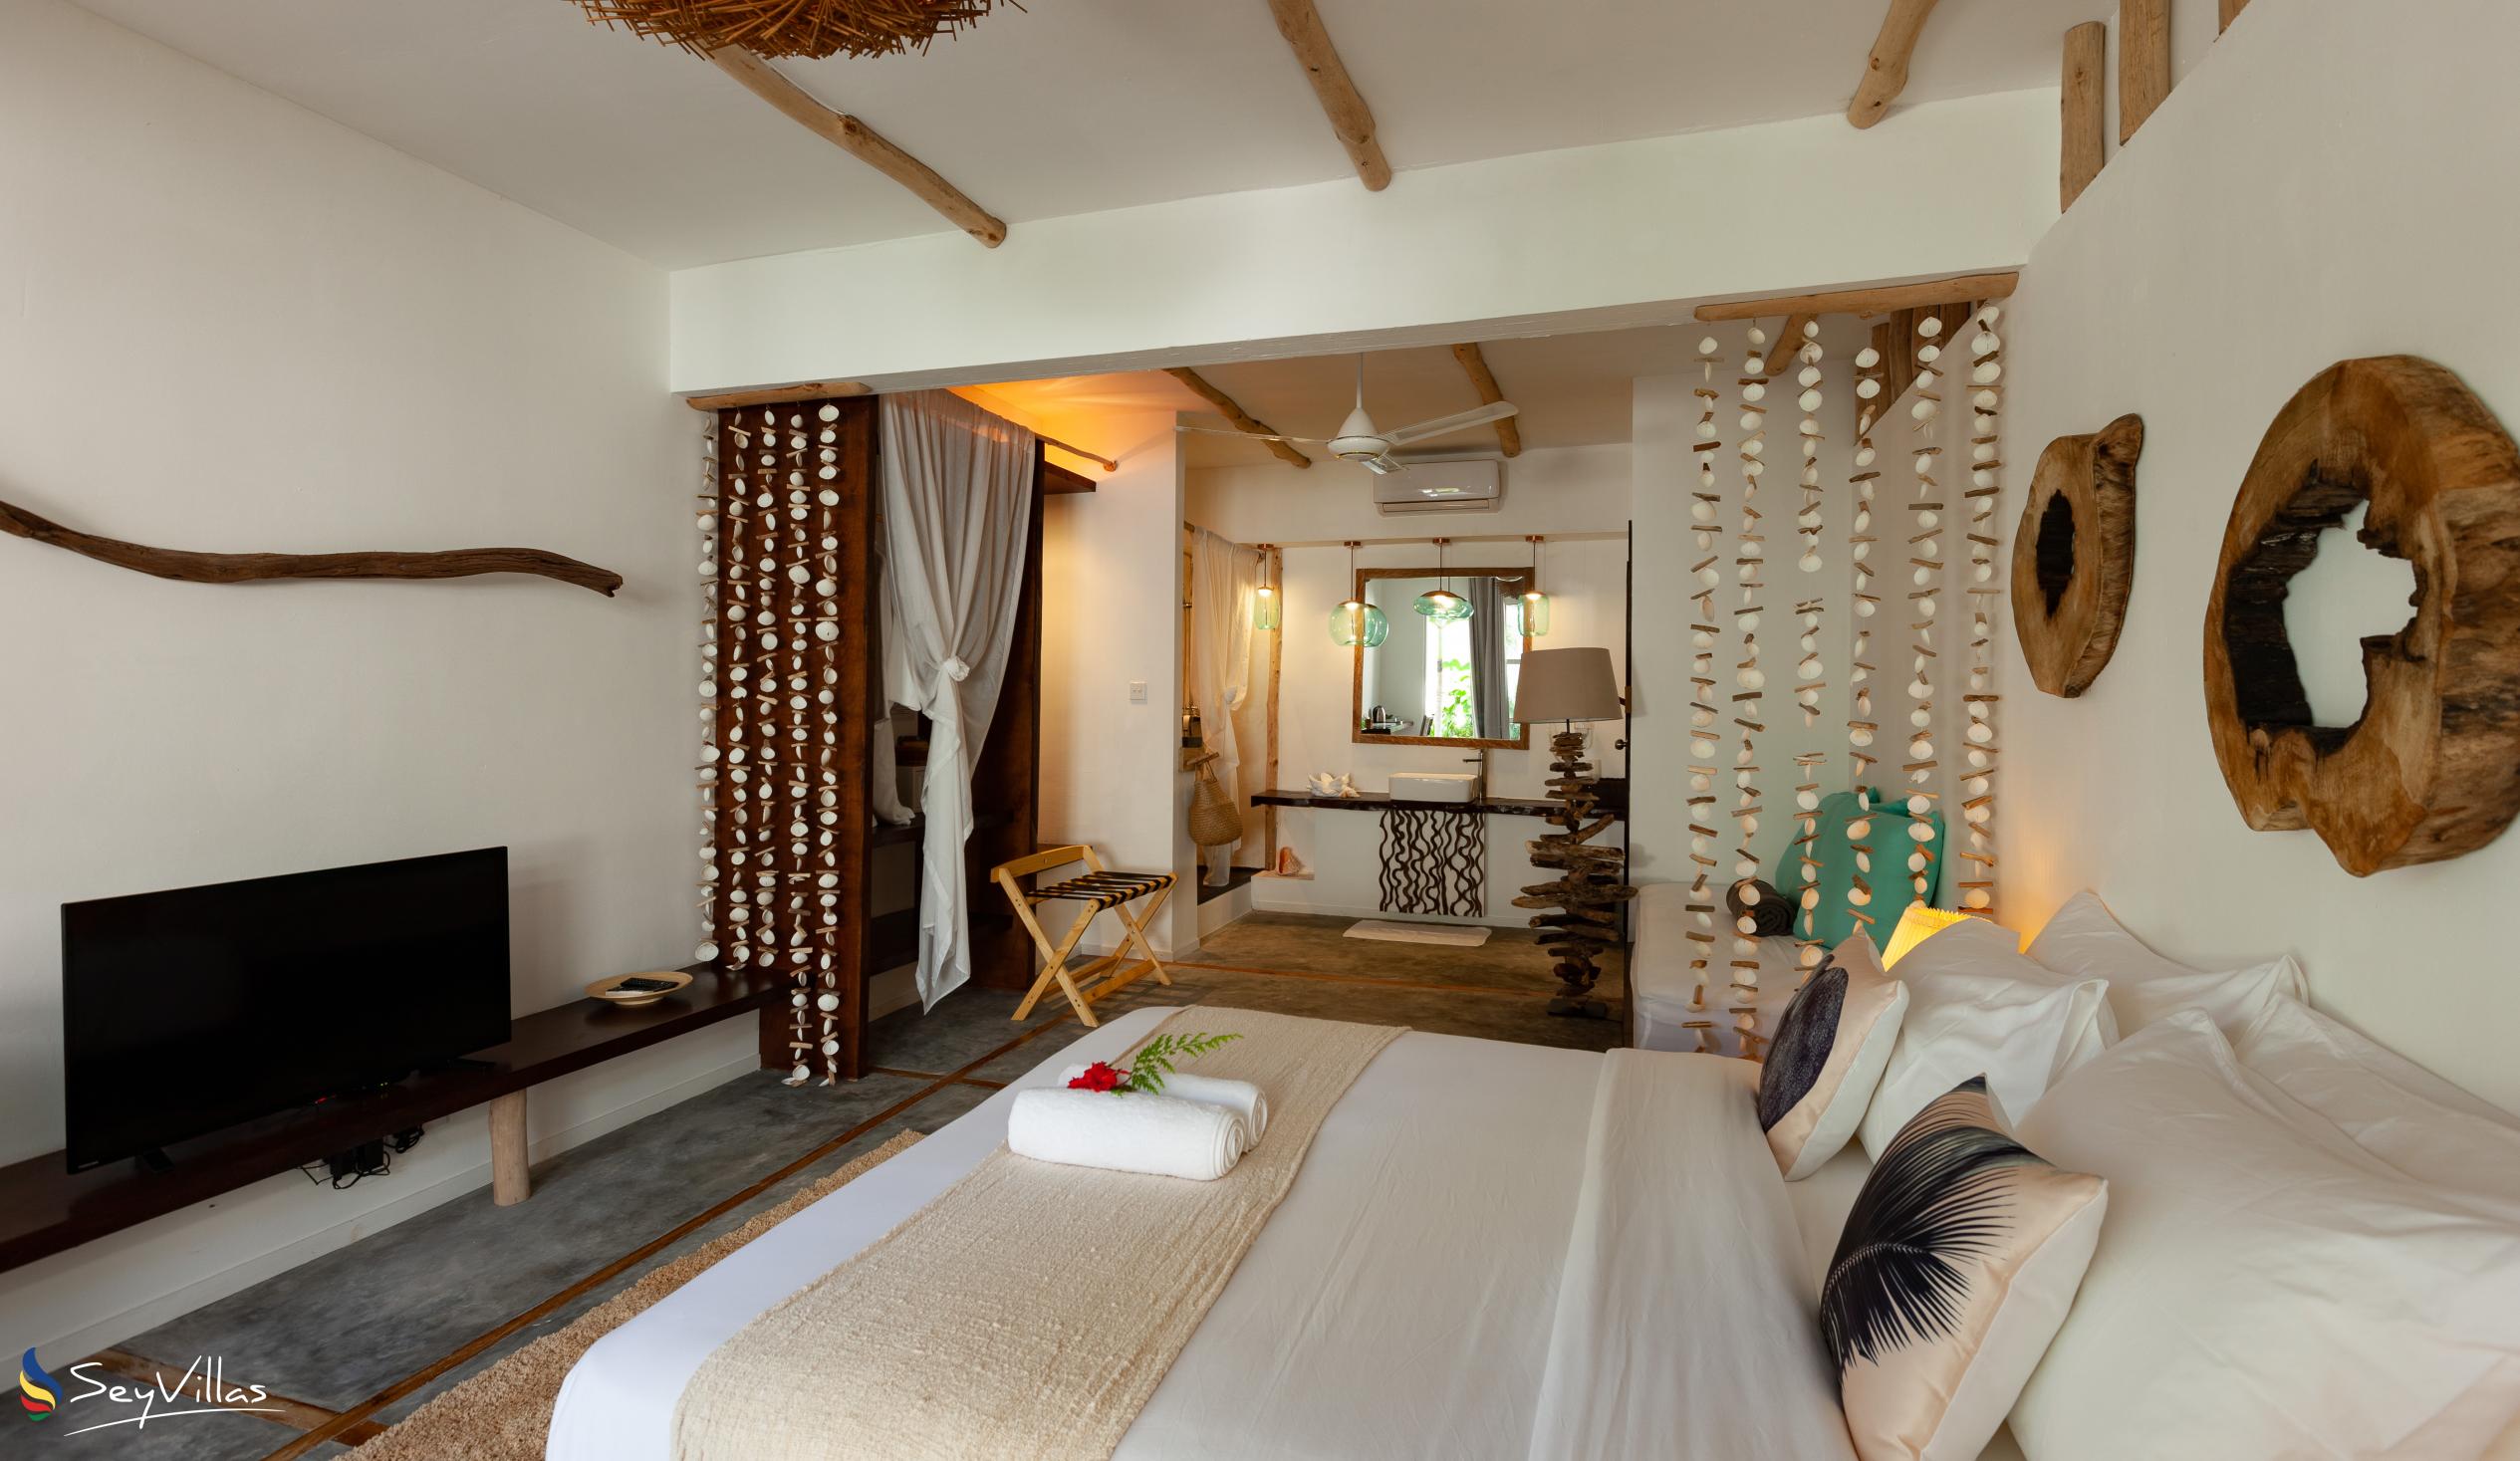 Foto 89: Bliss Hotel Praslin - Beach House - Camera Beach Garden Room - Praslin (Seychelles)